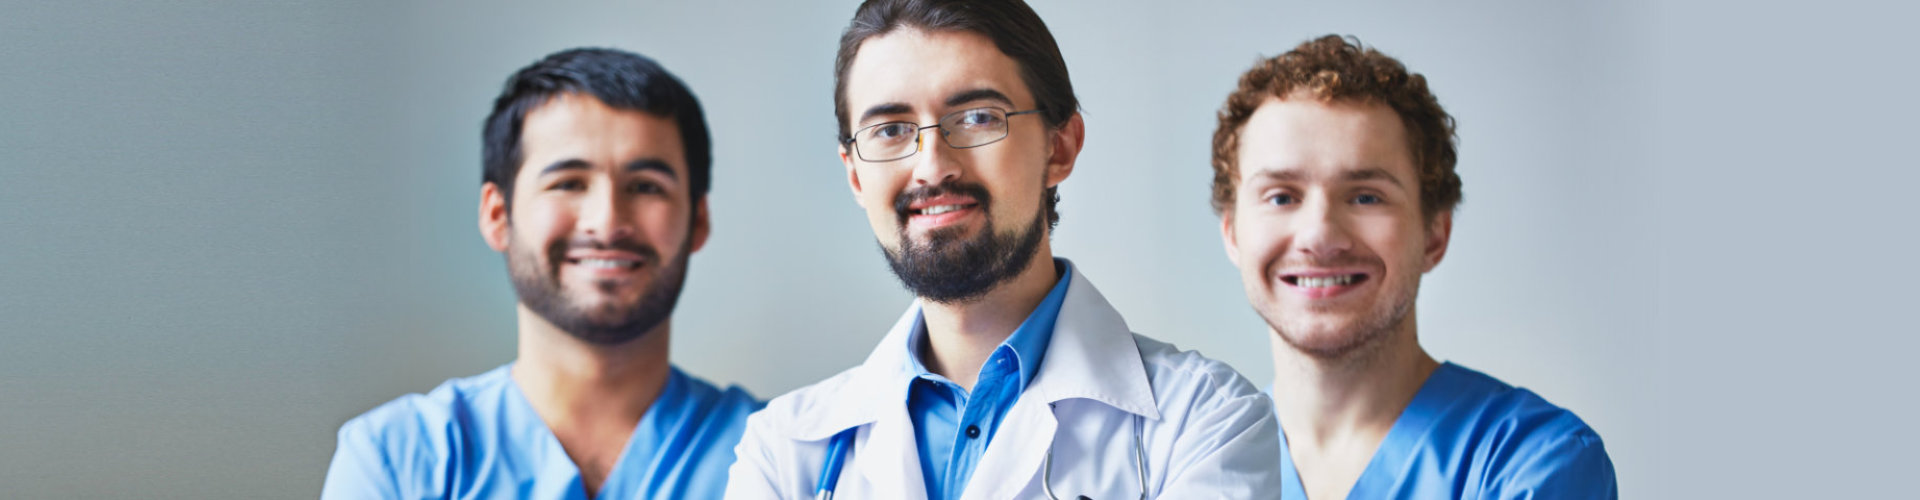 profressional medical health worker smiling